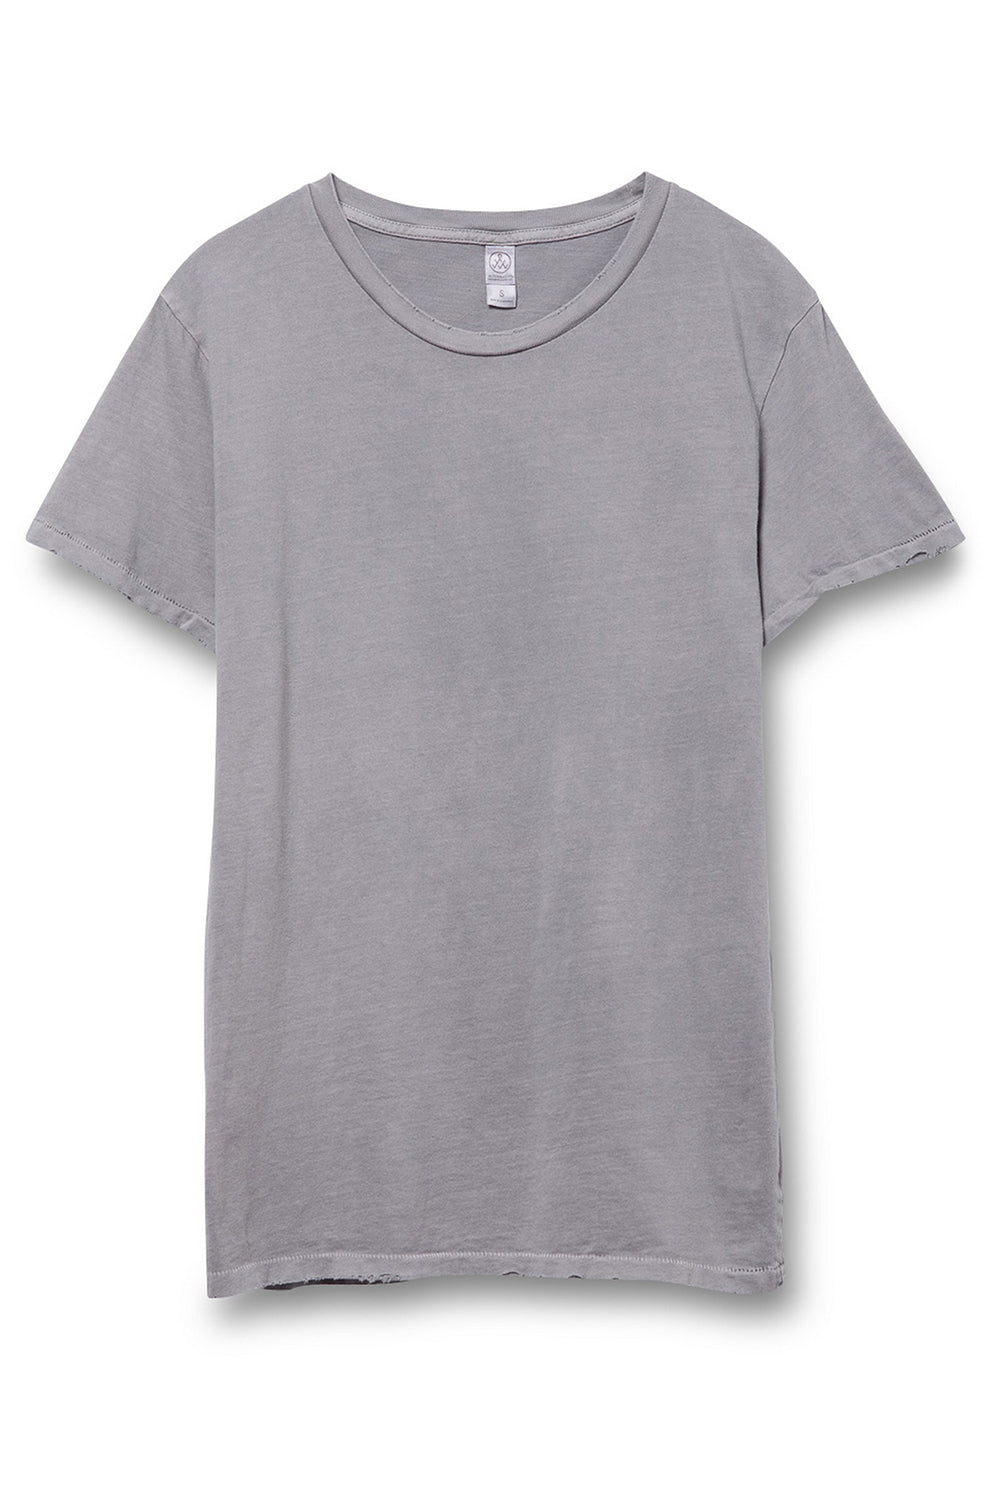 Alternative 04850C1/4850 Mens Heritage Distressed Short Sleeve Crewneck T-Shirt Grey Flat Front